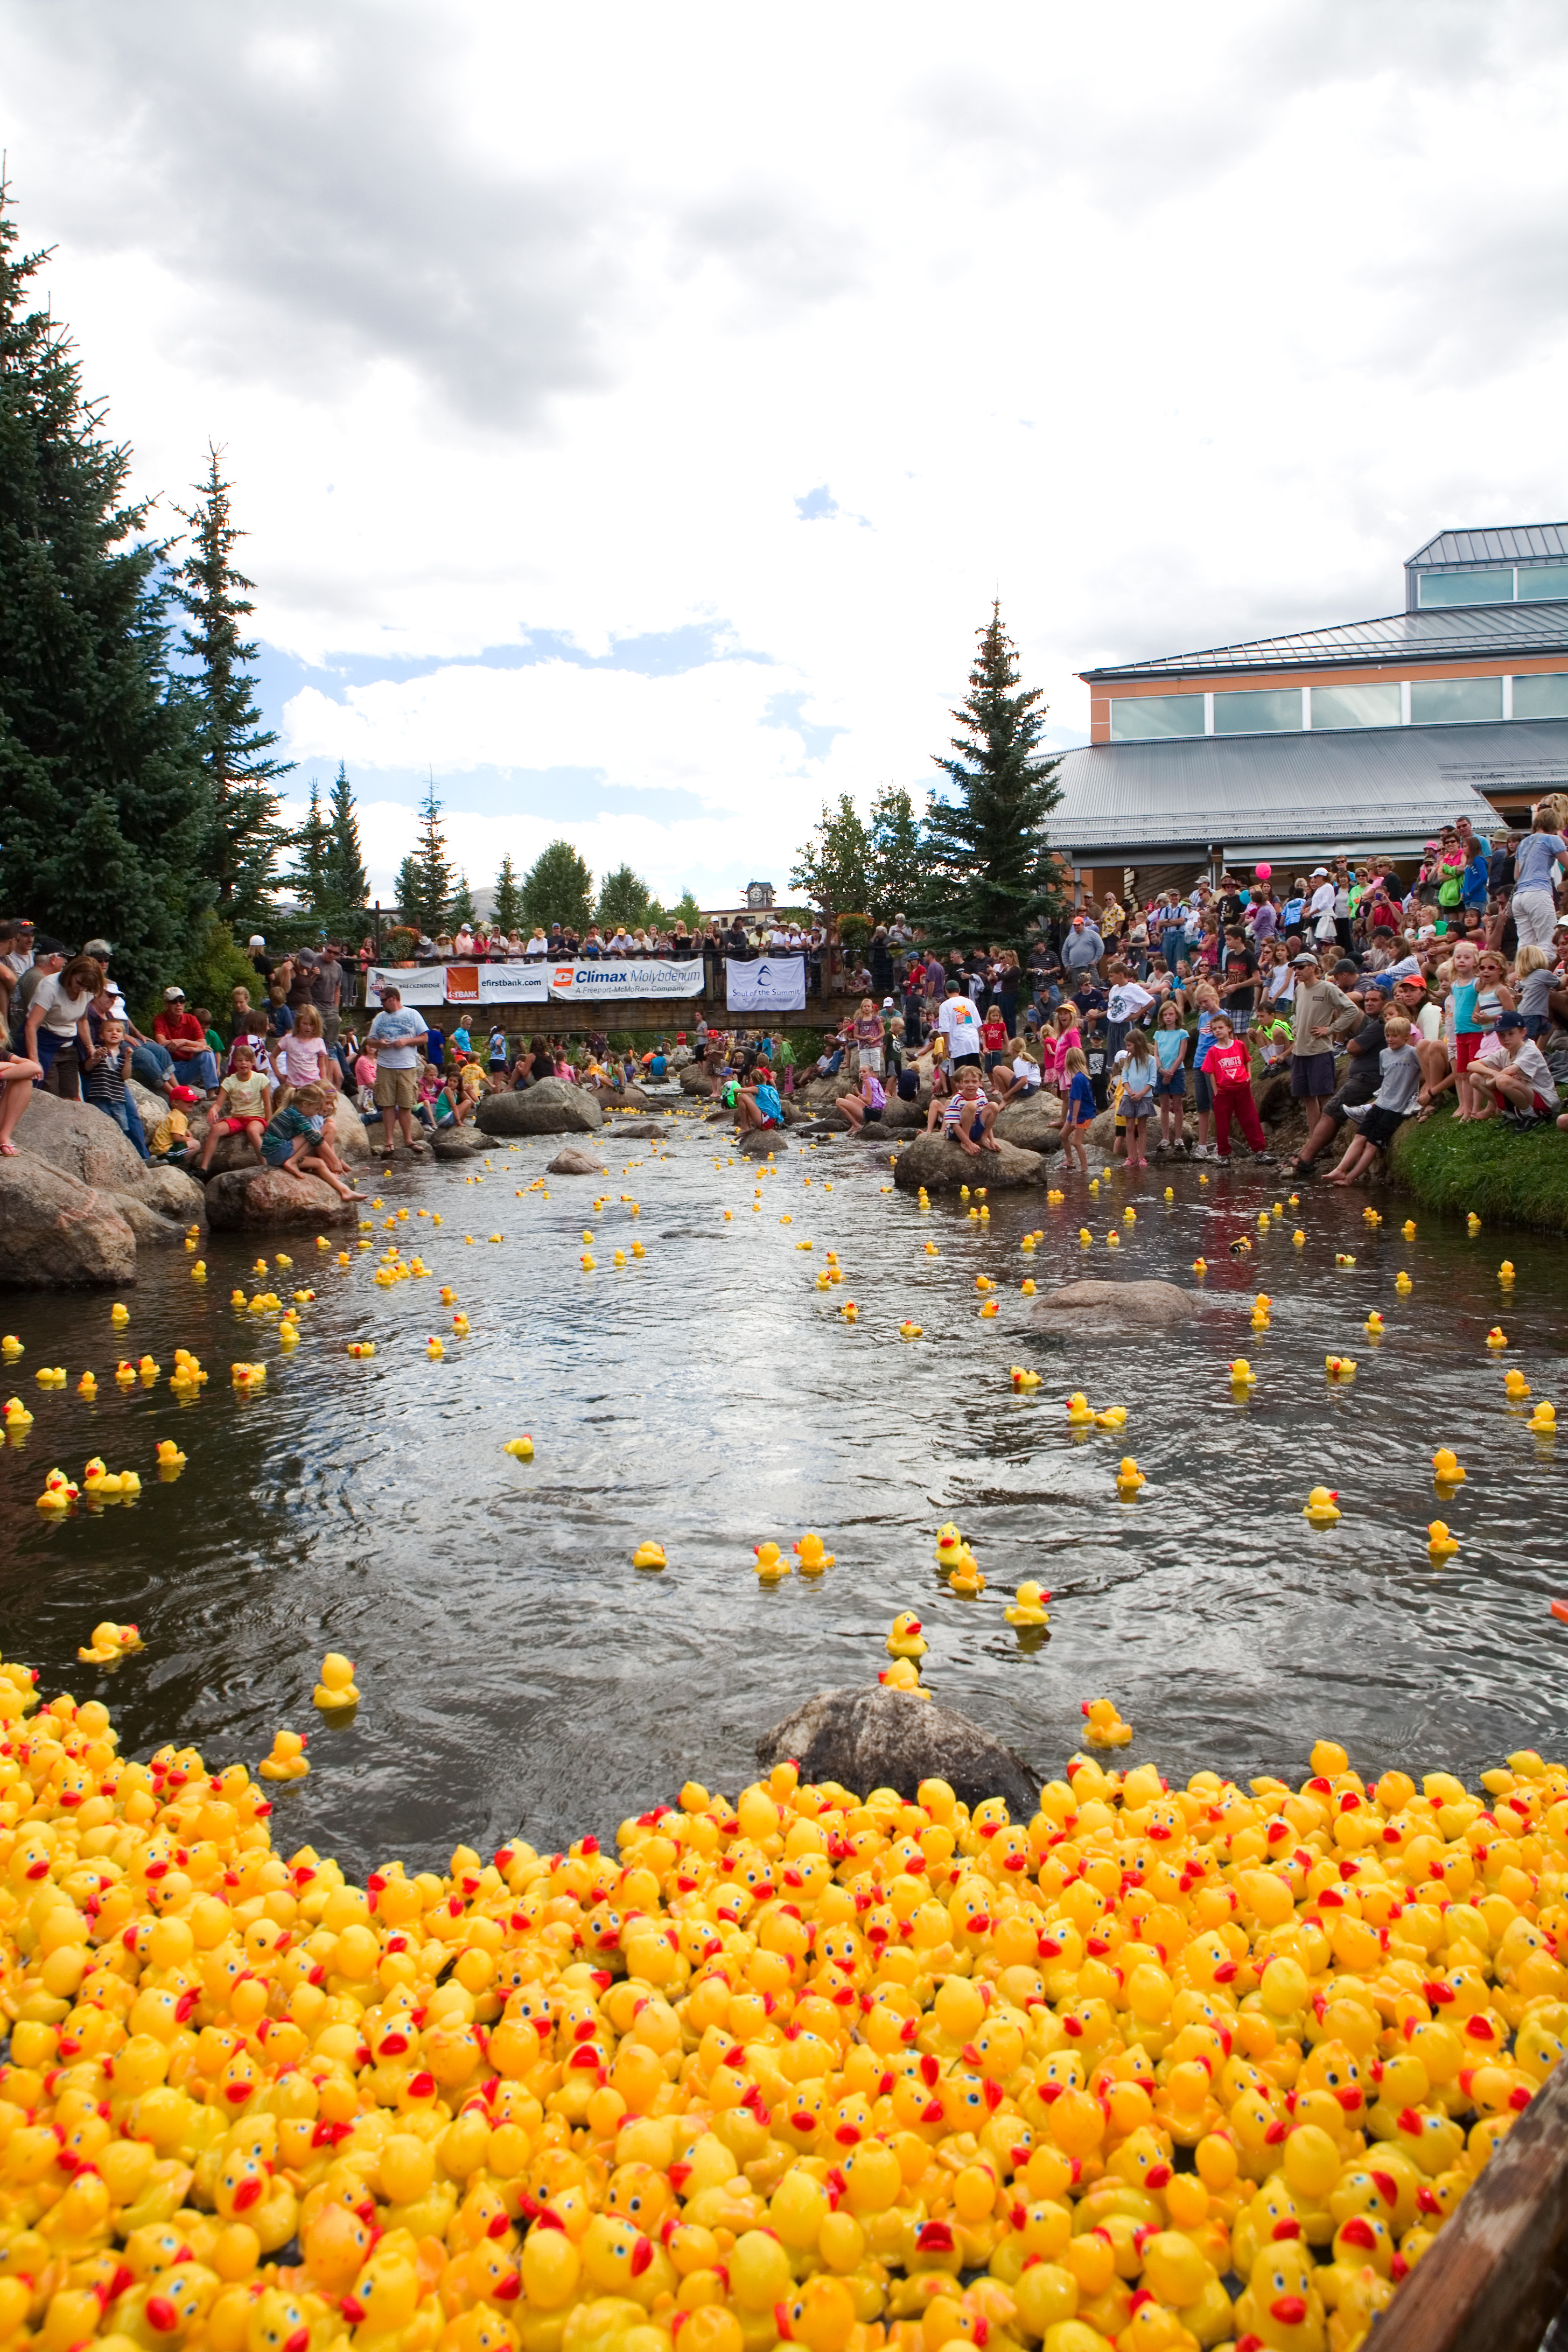 The Rubber Duck Race in Breckenridge